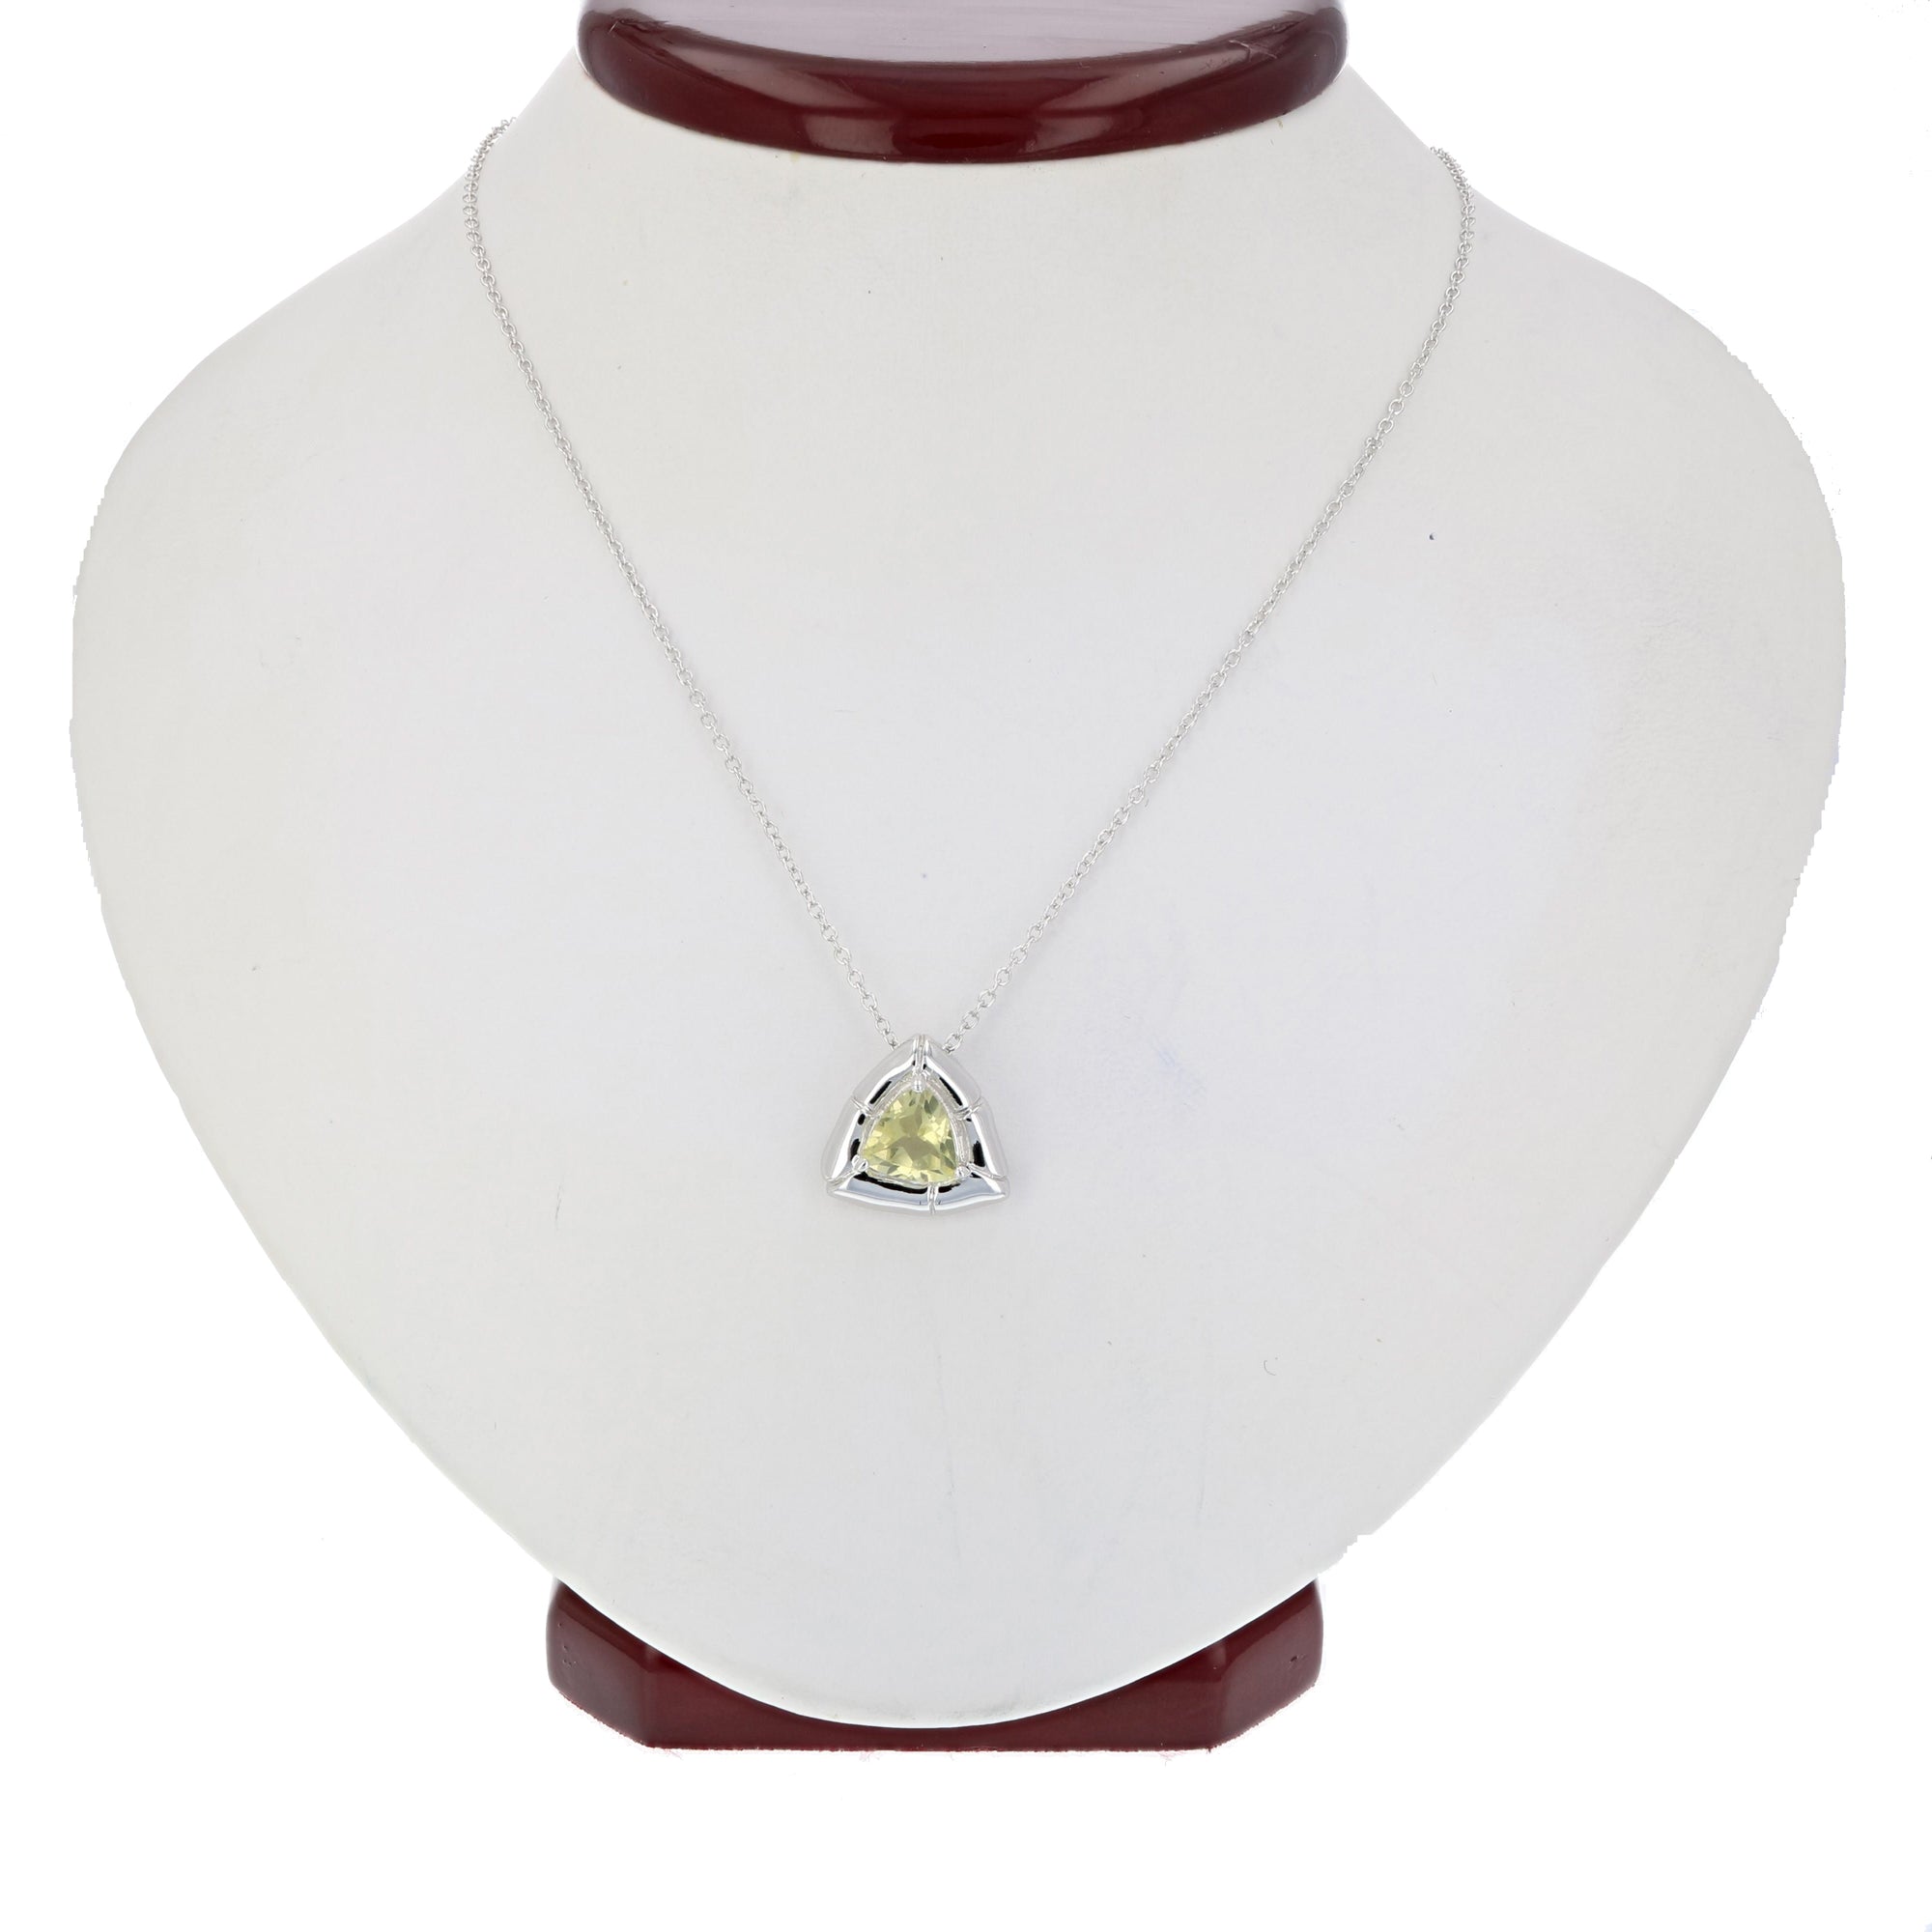 1 cttw Pendant Necklace, Lemon Quartz Trillion Shape Pendant Necklace for Women in .925 Sterling Silver with Rhodium, 18 Inch Chain, Prong Setting